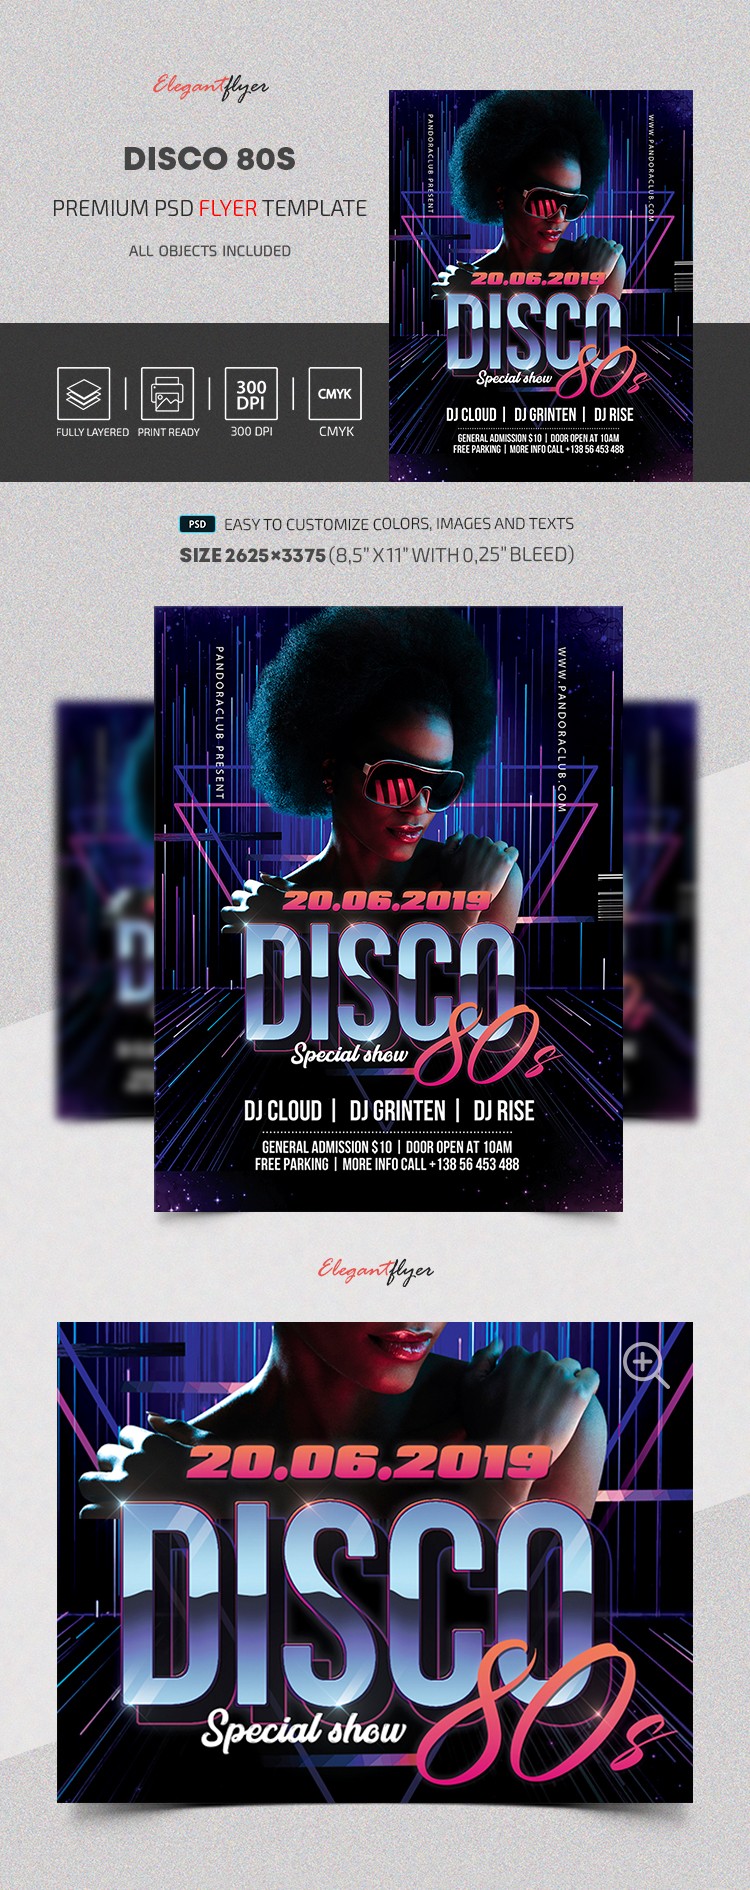 Disco anos 80 by ElegantFlyer